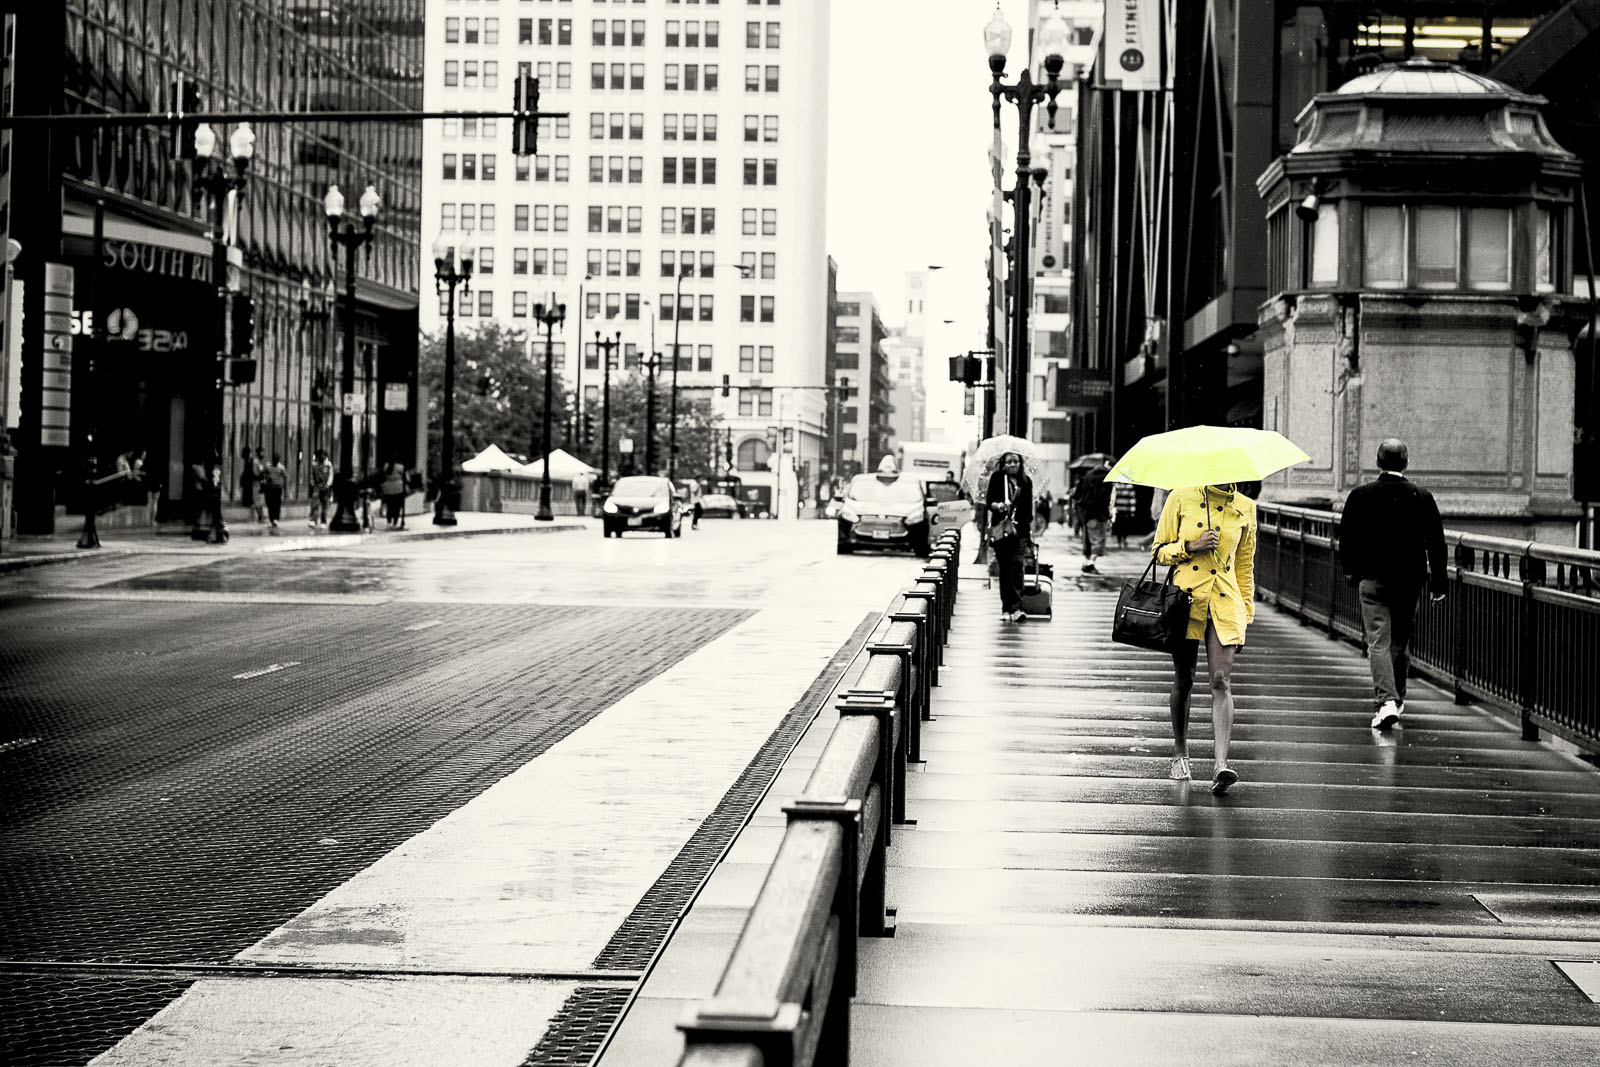 Lonley Girl with Yellow Umbrella, USA, 2015